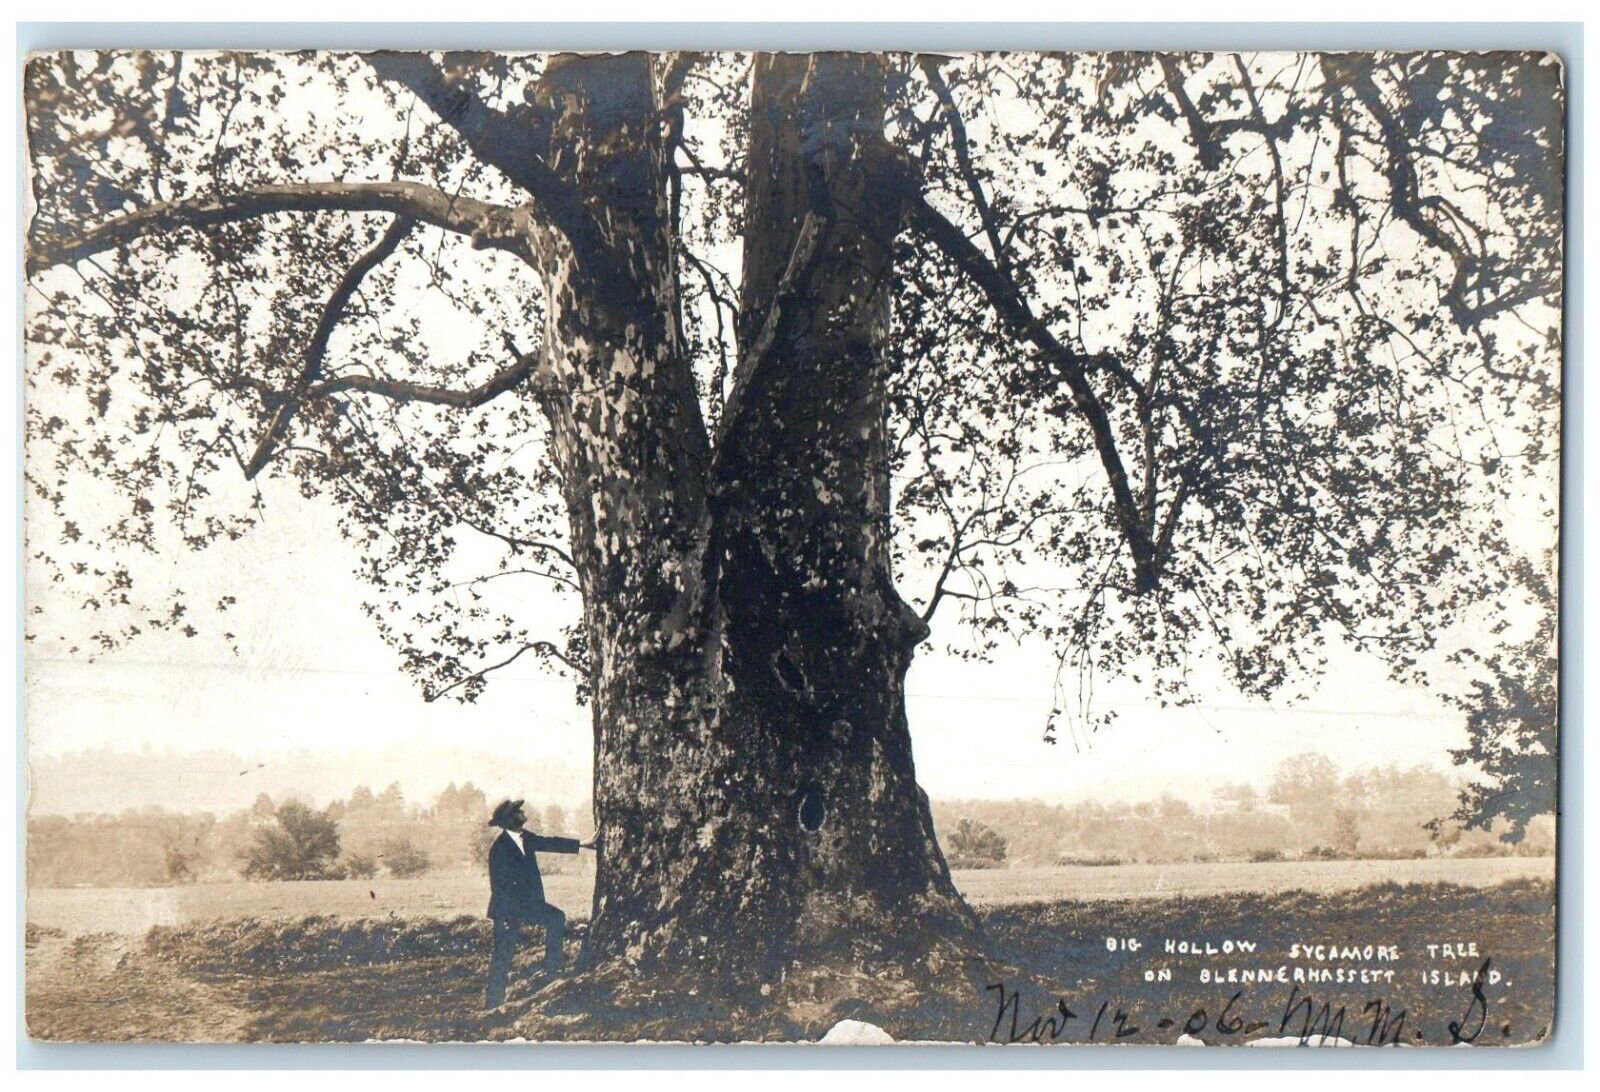 Big Hollow Sycamore Tree Blennerhasset Island Parkersburg WV RPPC Photo Postcard